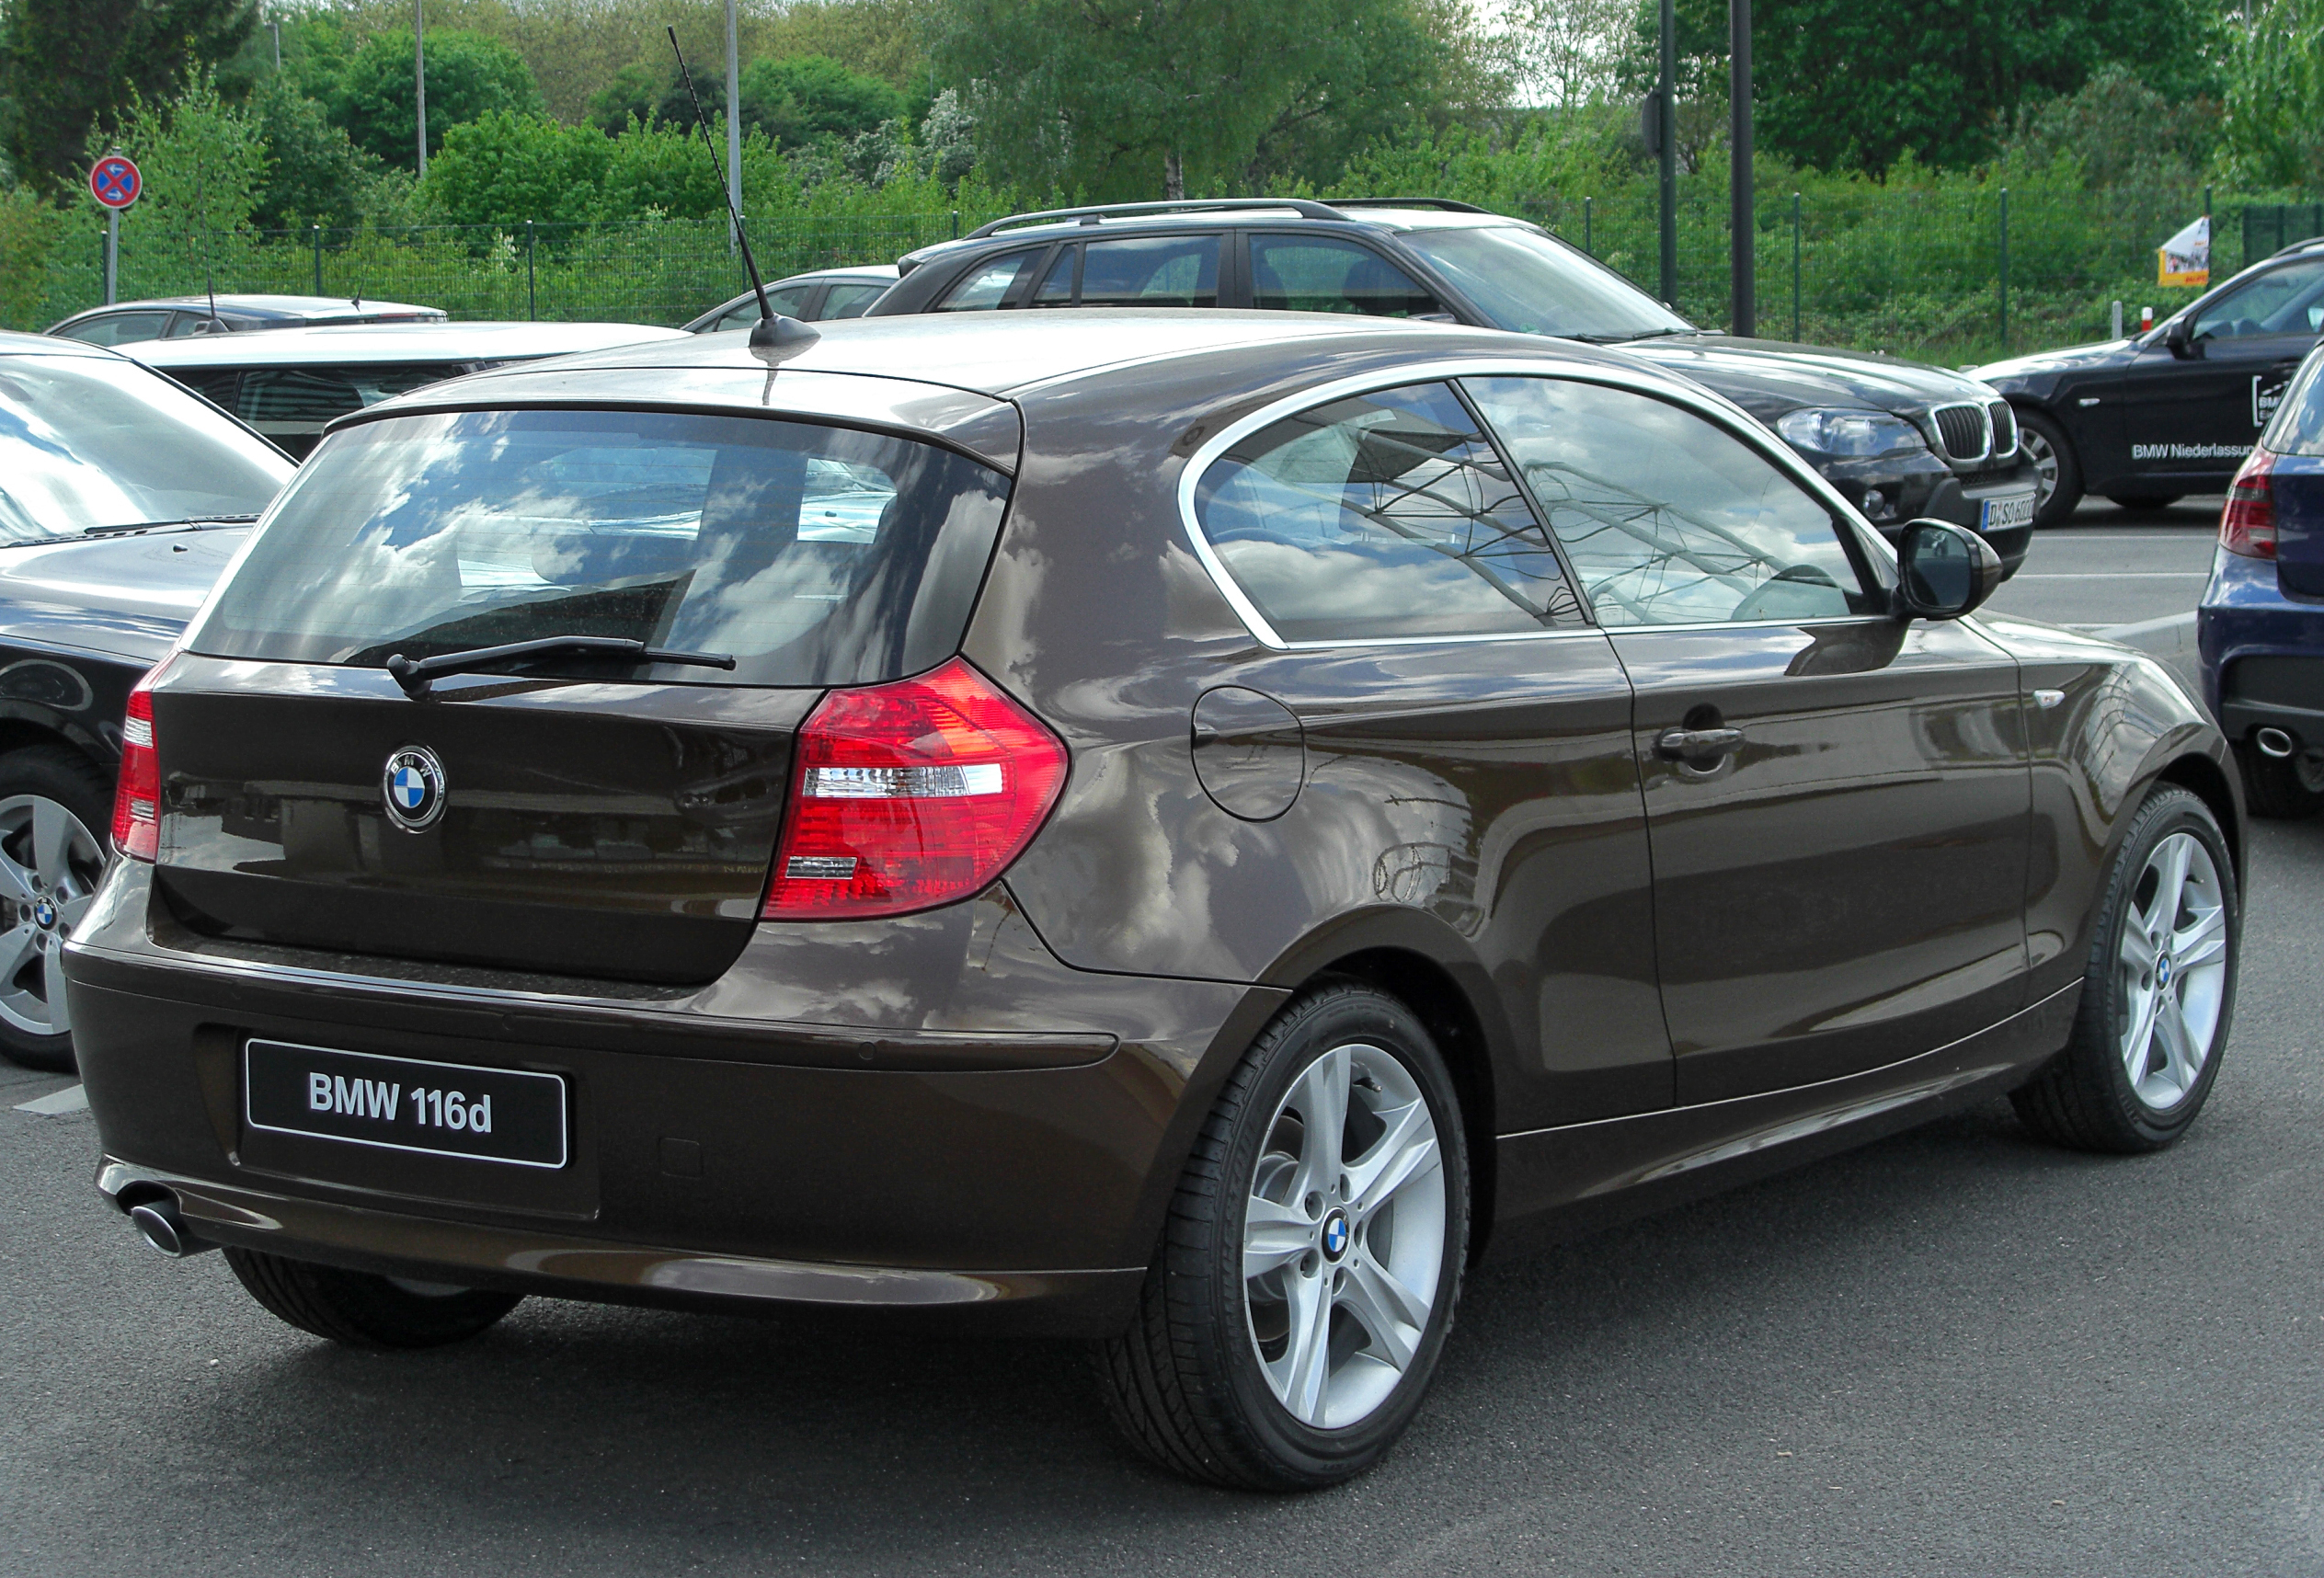 File:BMW 116d (E81) Facelift rear 20100501.jpg - Wikimedia Commons